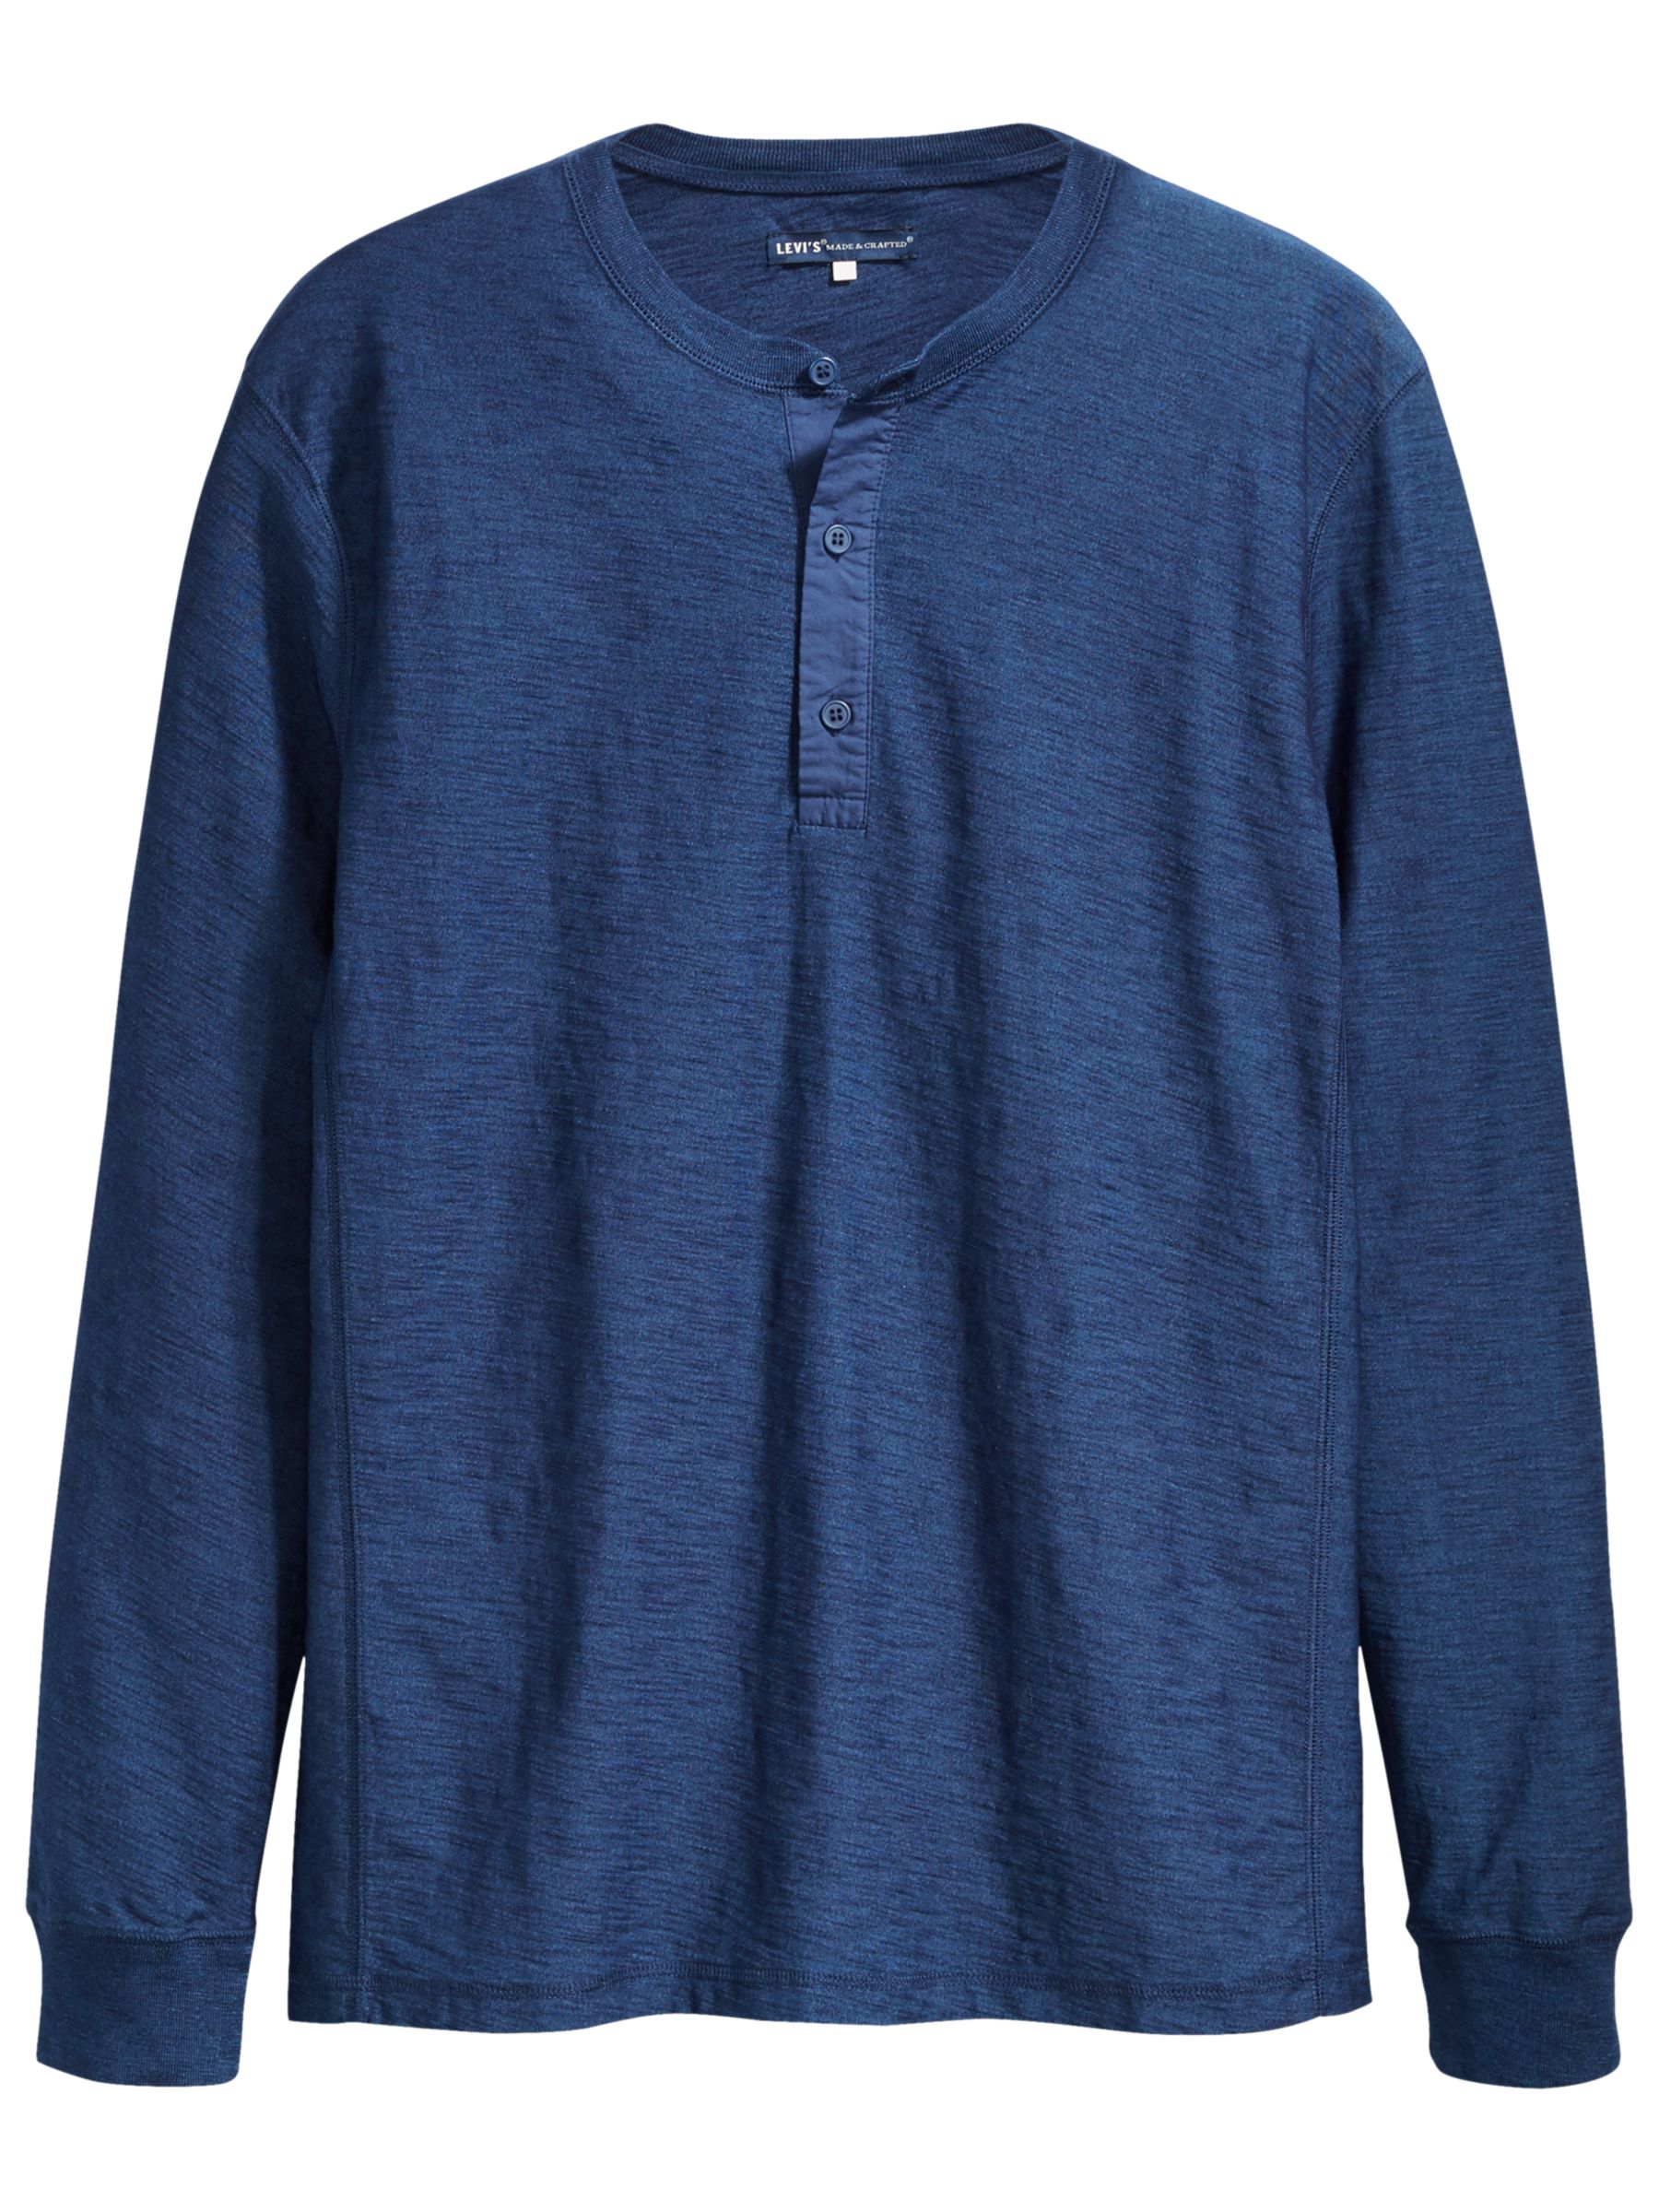 Levi's Made & Crafted Henley Buttoned Long Sleeve T-Shirt, Dark Indigo